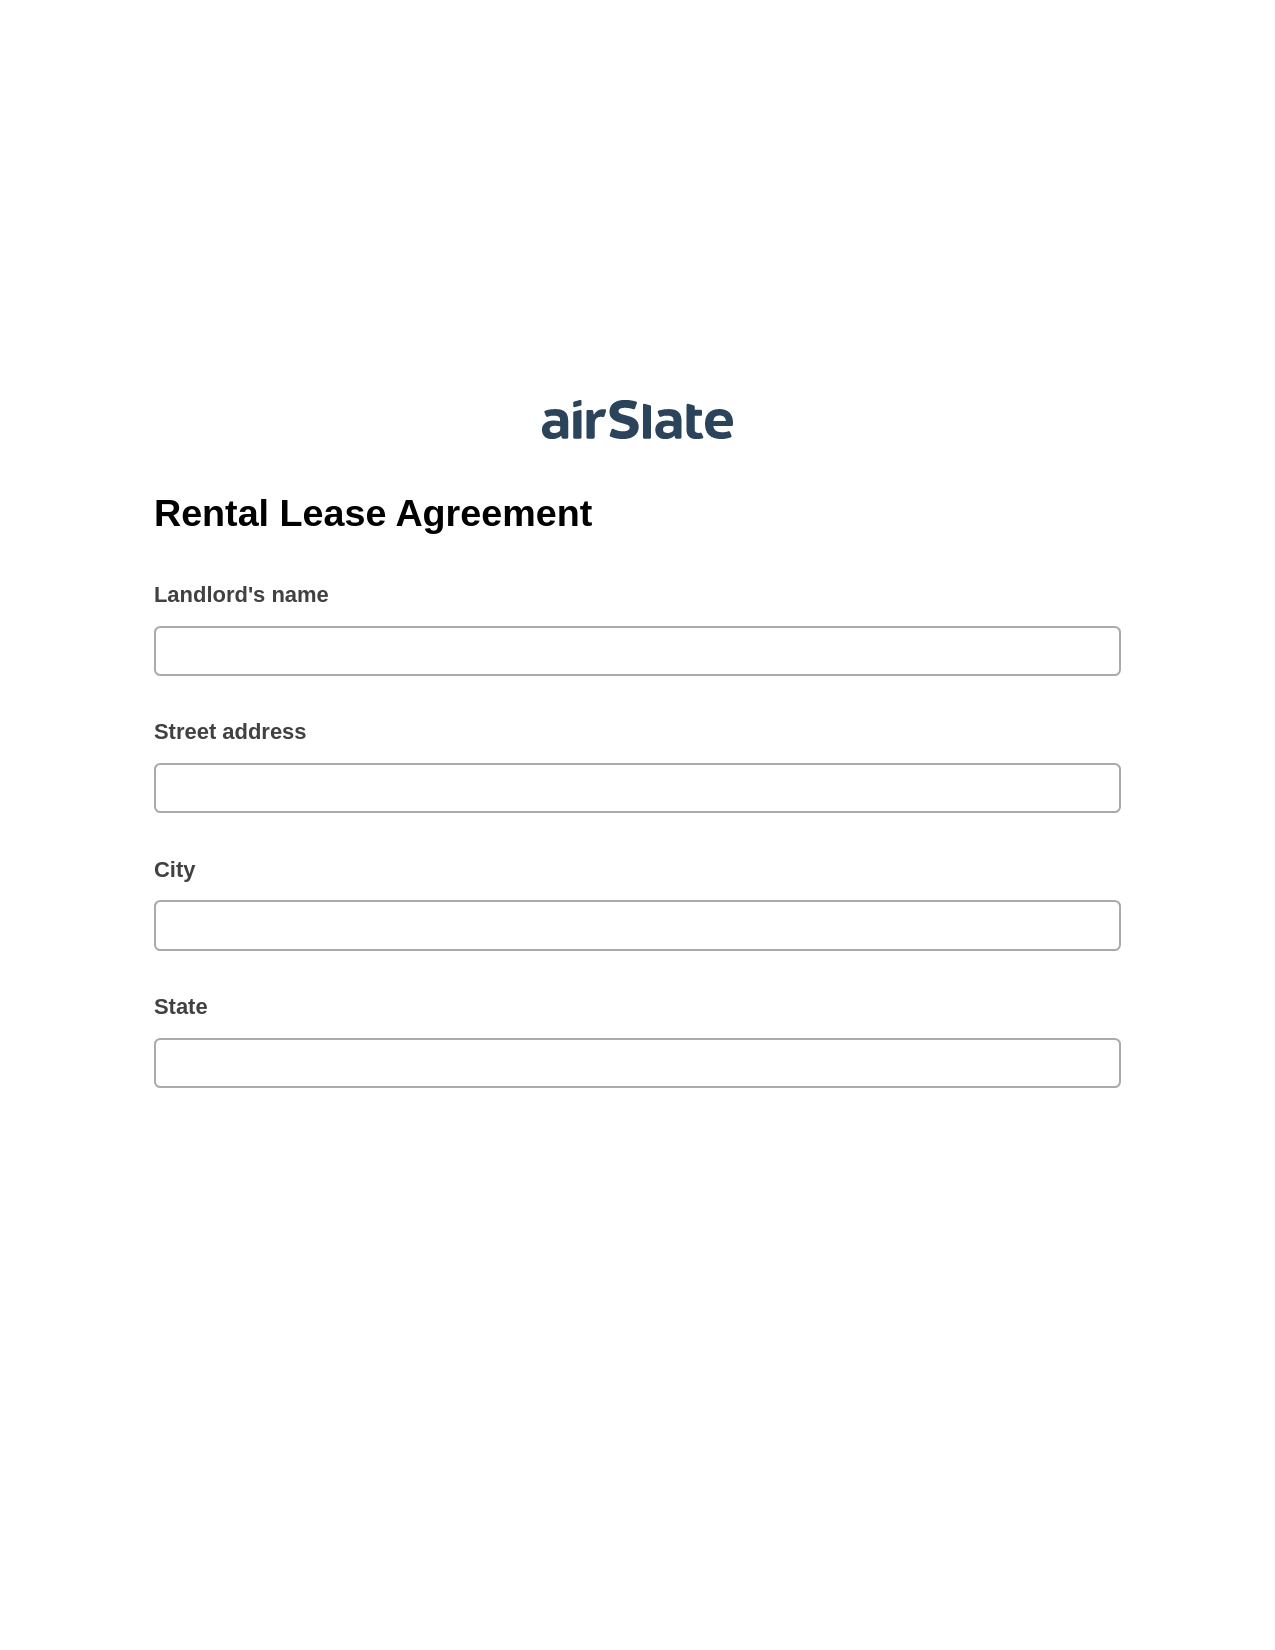 Rental Lease Agreement Pre-fill from Google Sheet Dropdown Options Bot, Jira Bot, Export to Google Sheet Bot